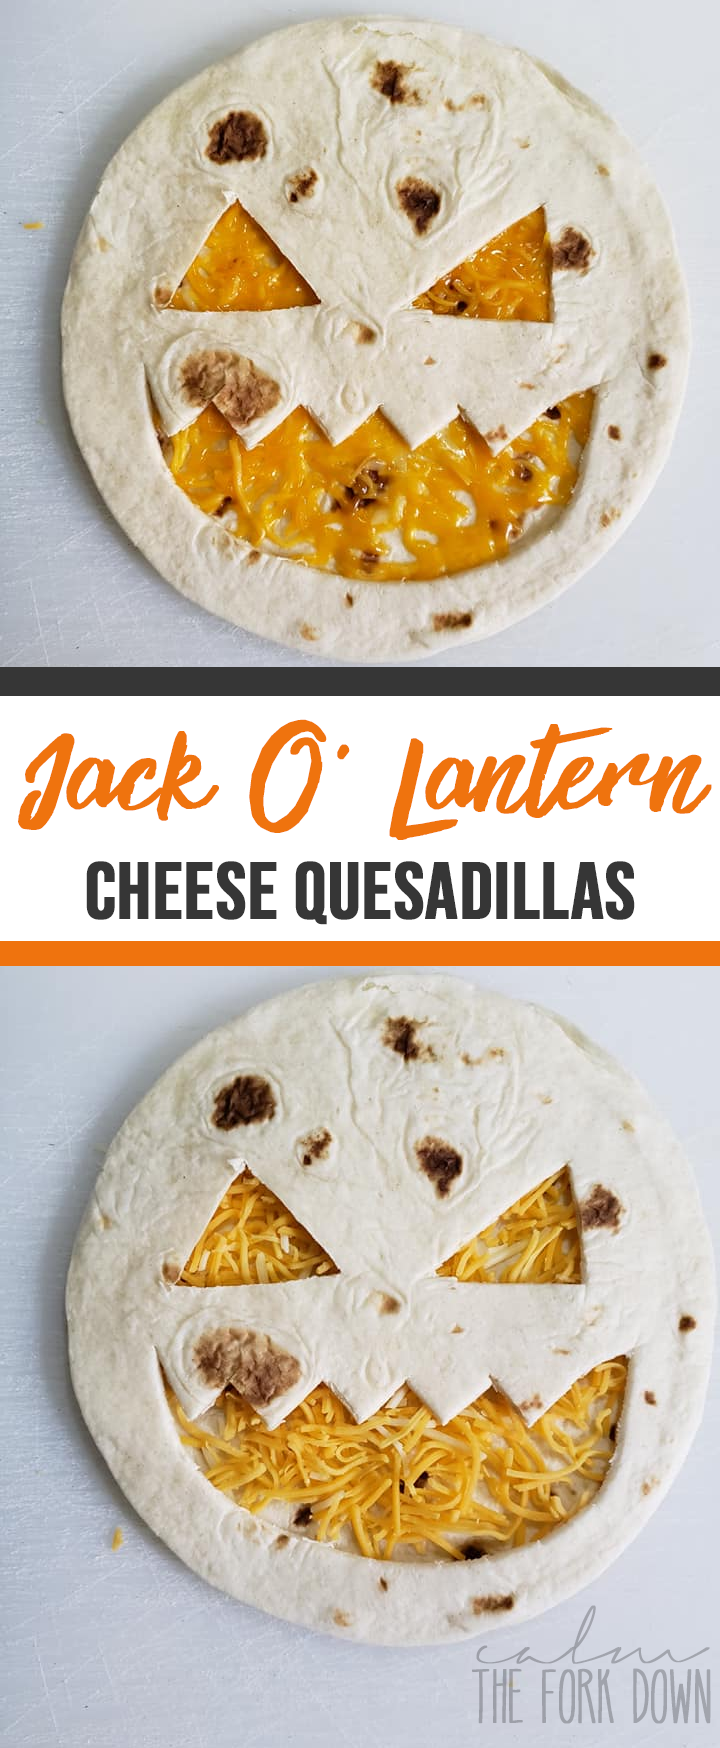 Jack O' Lantern Cheese Quesadillas